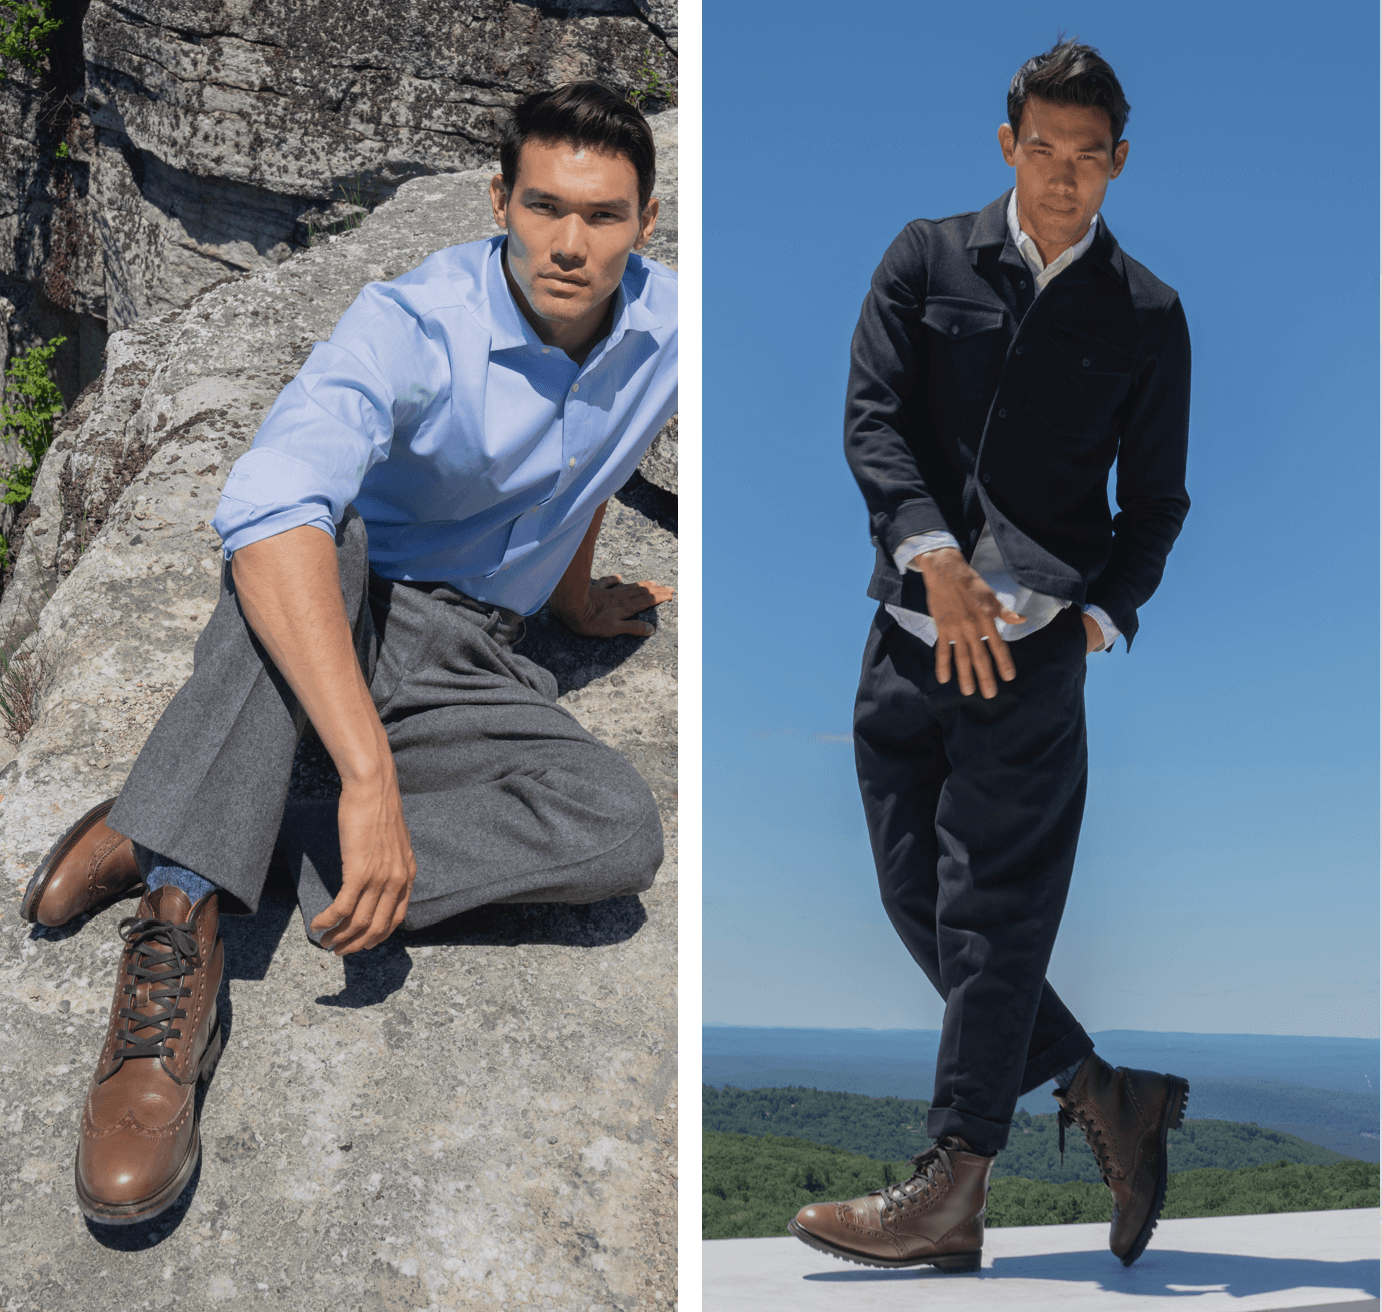 Allen Edmonds Lookbook | Men's Dress & Casual Style Guide